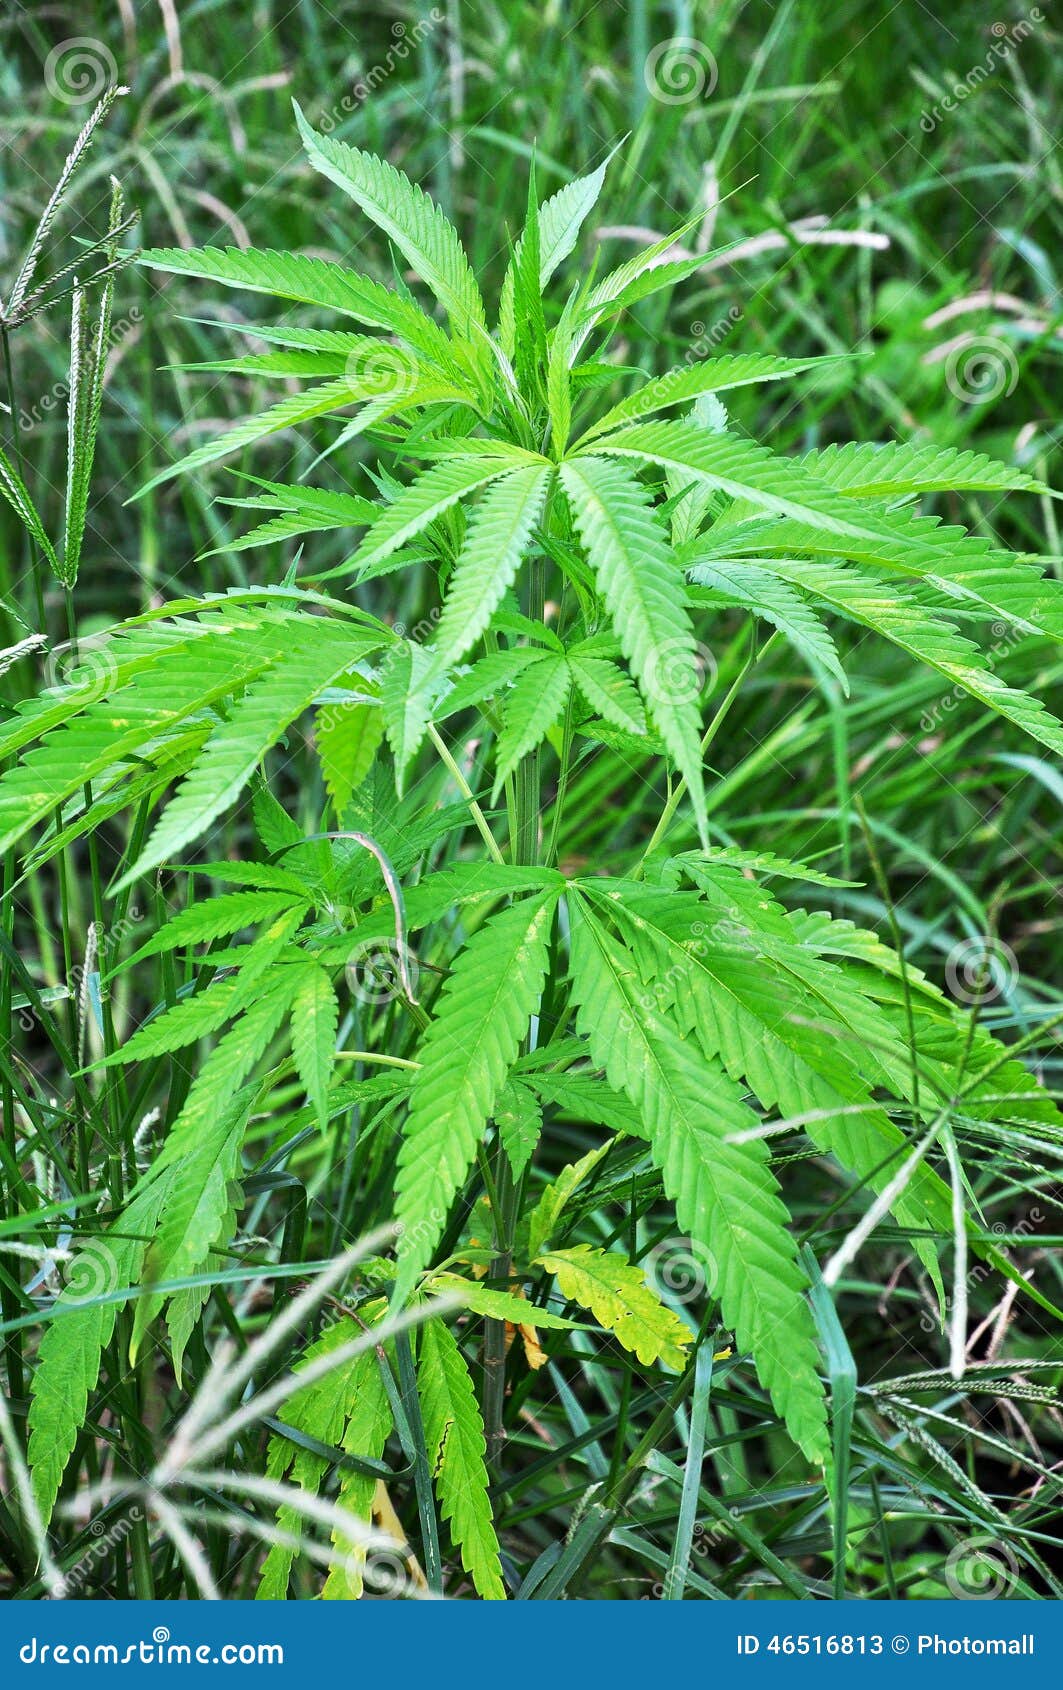 Grow Medical Marijuana Outdoors, The Easy Way